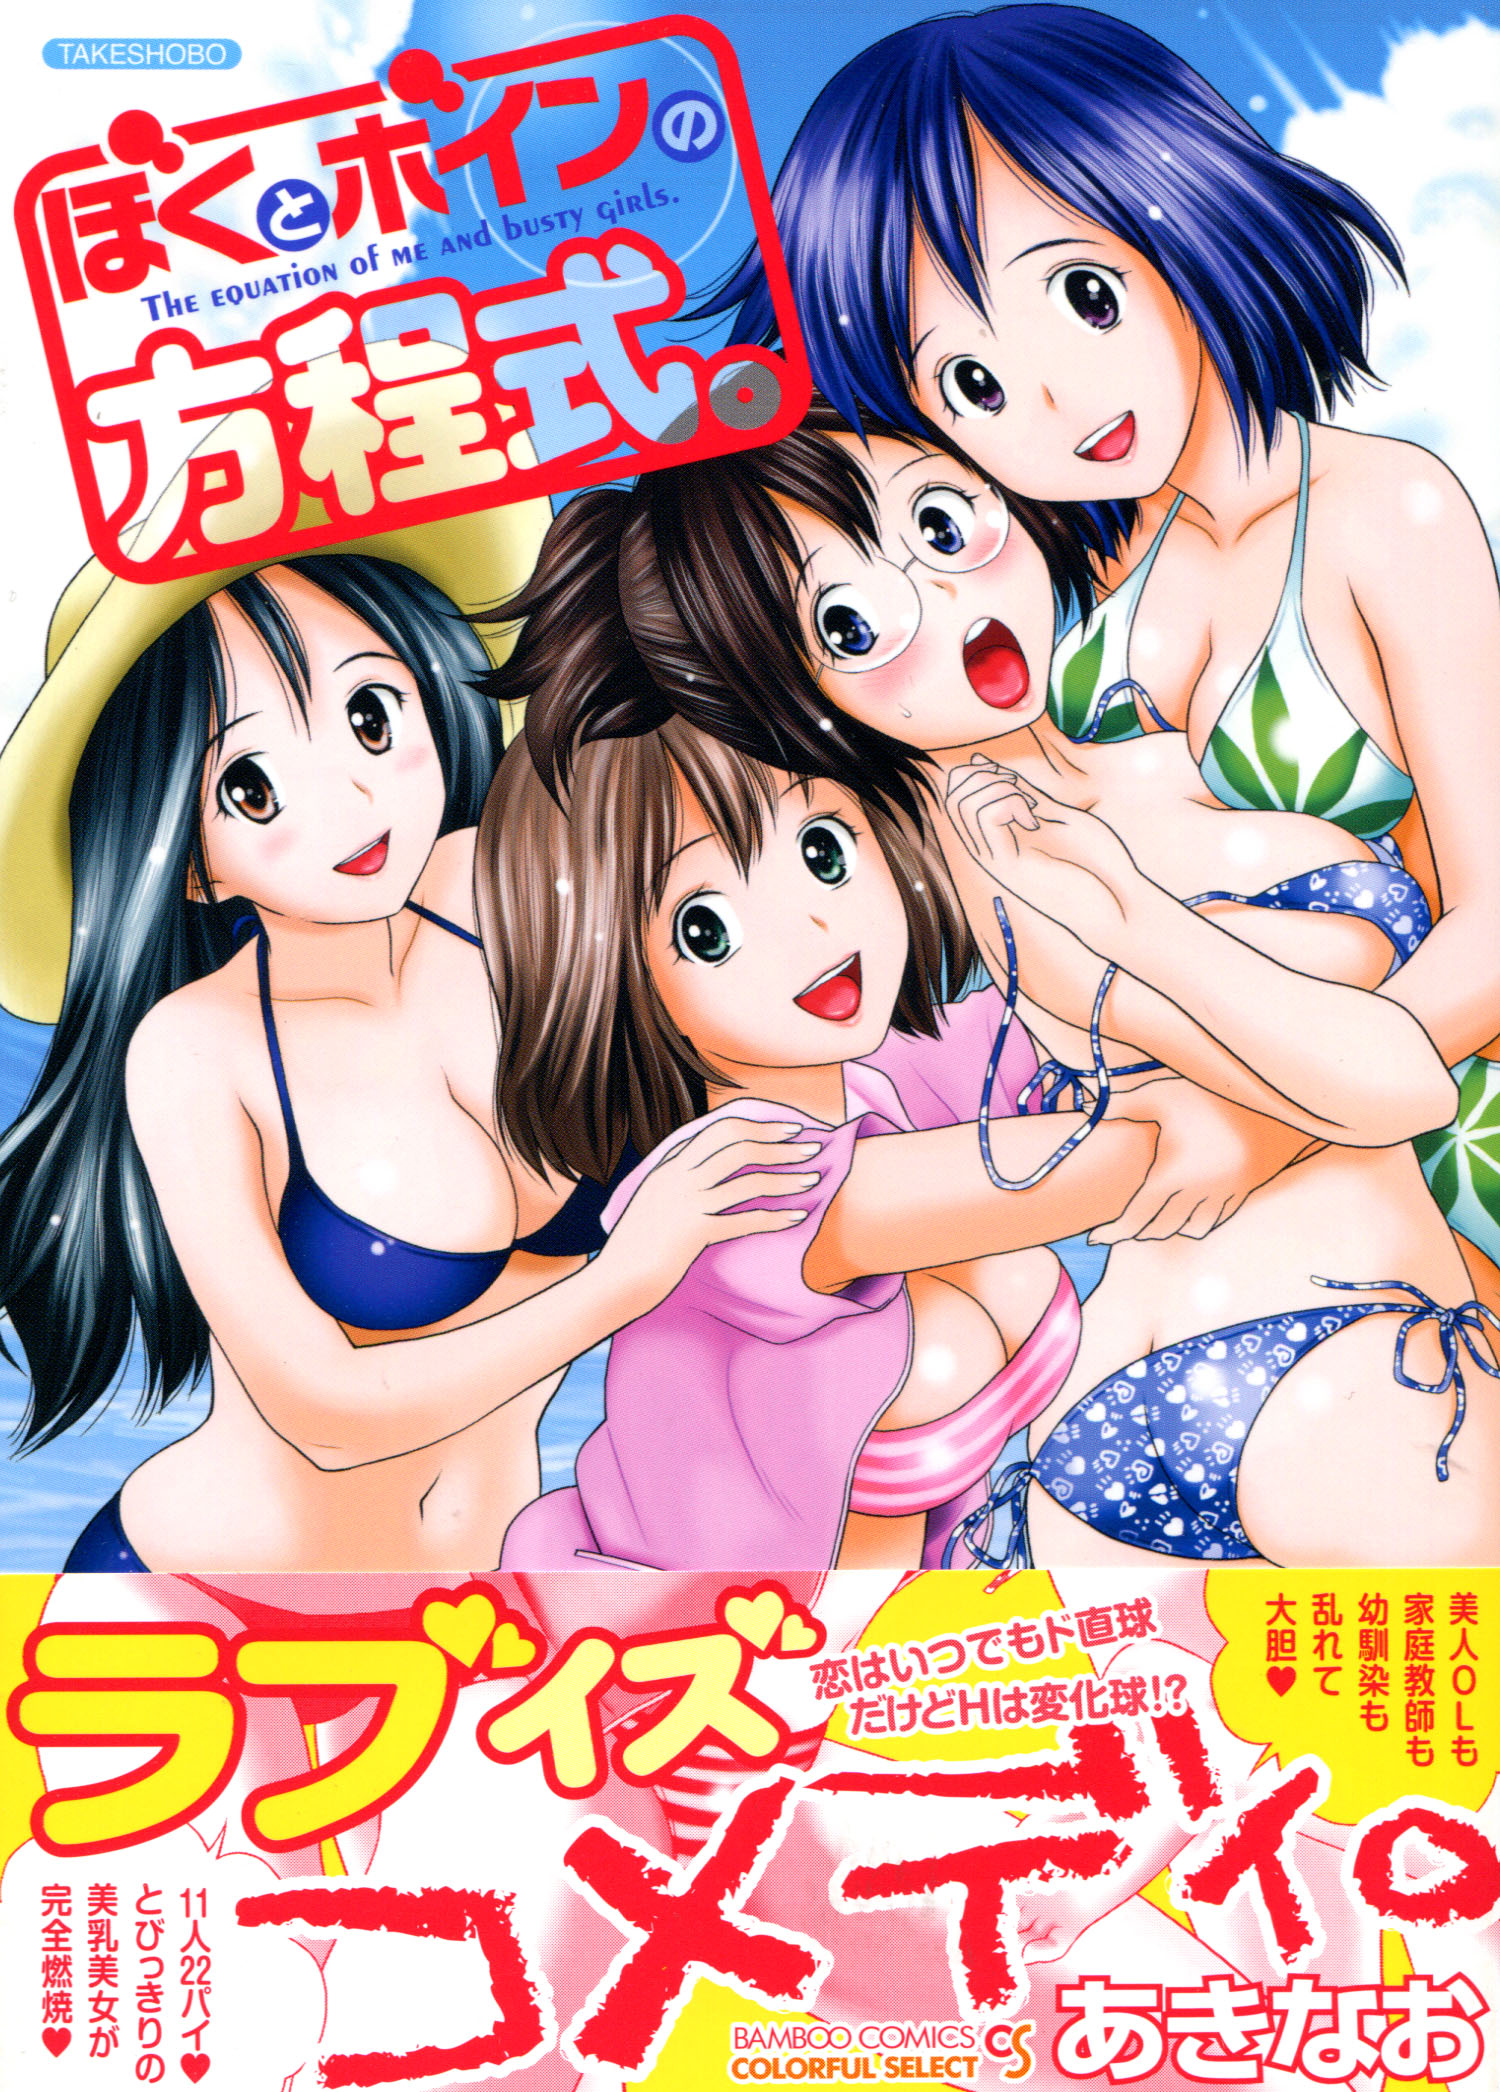 The Equation of me and Busty Girls (Hentai Manga)